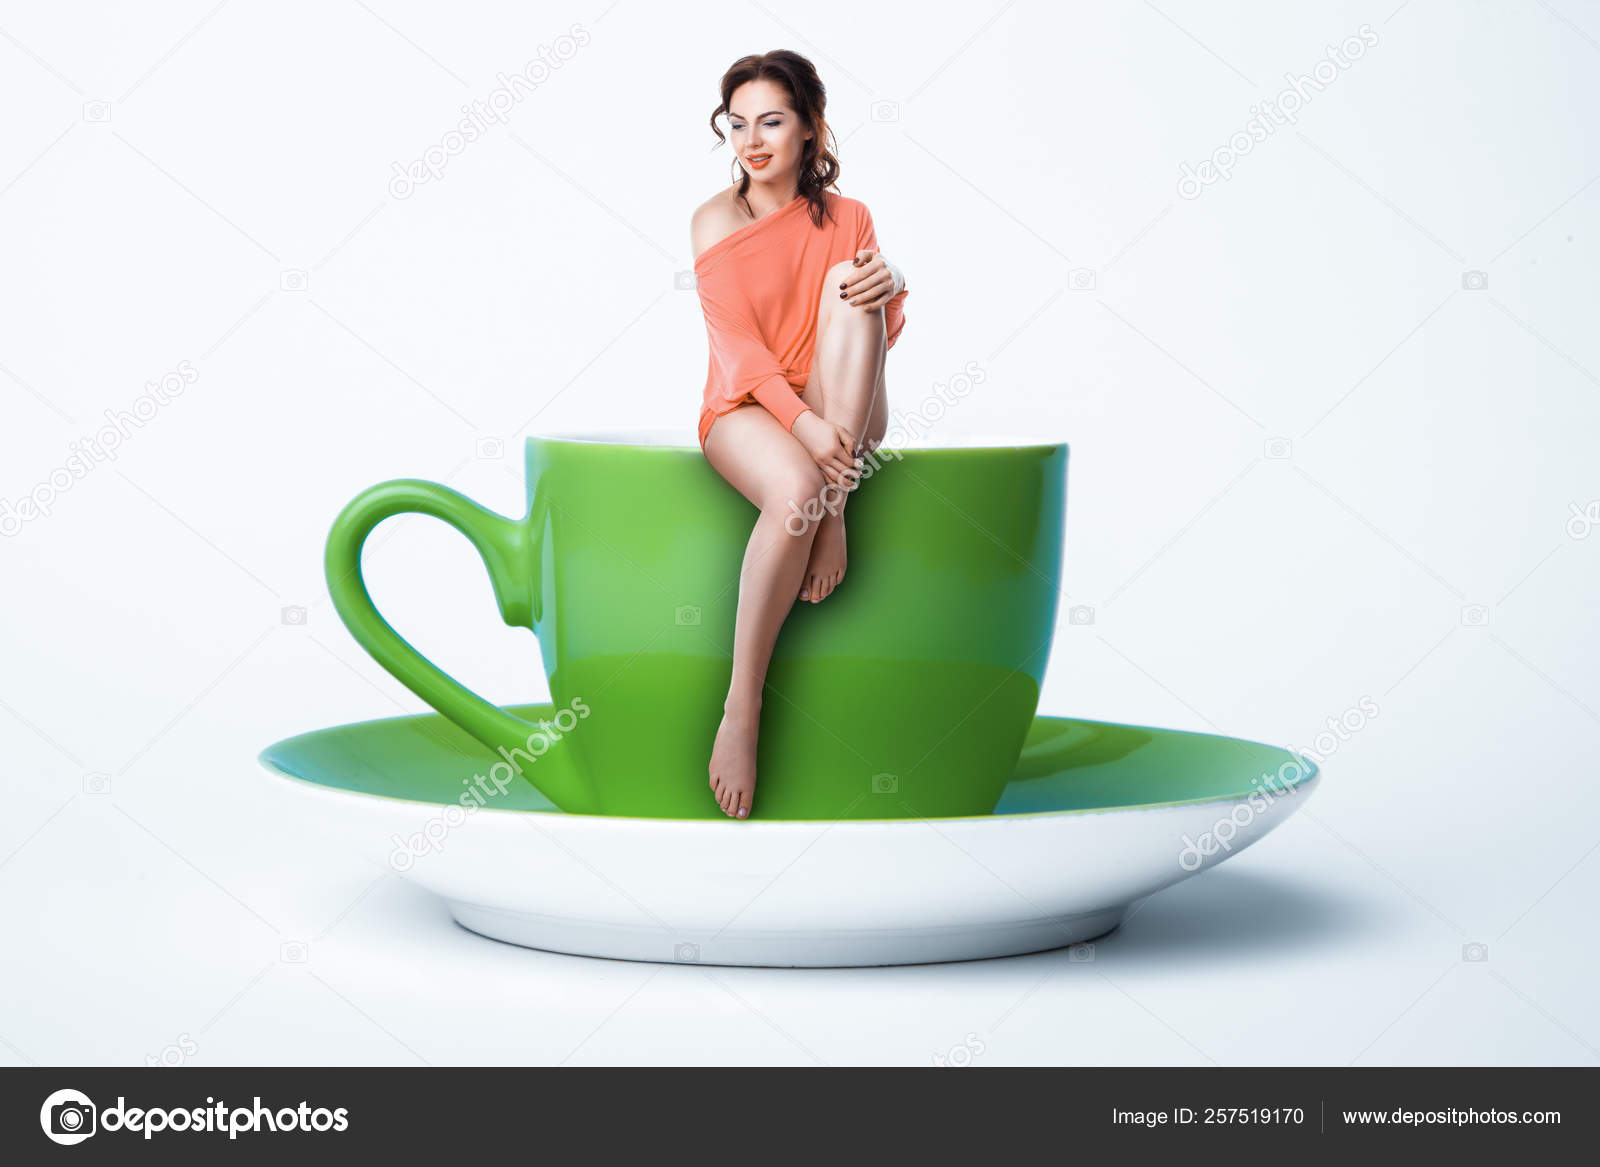 https://st4.depositphotos.com/6489676/25751/i/1600/depositphotos_257519170-stock-photo-small-female-sitting-on-giant.jpg